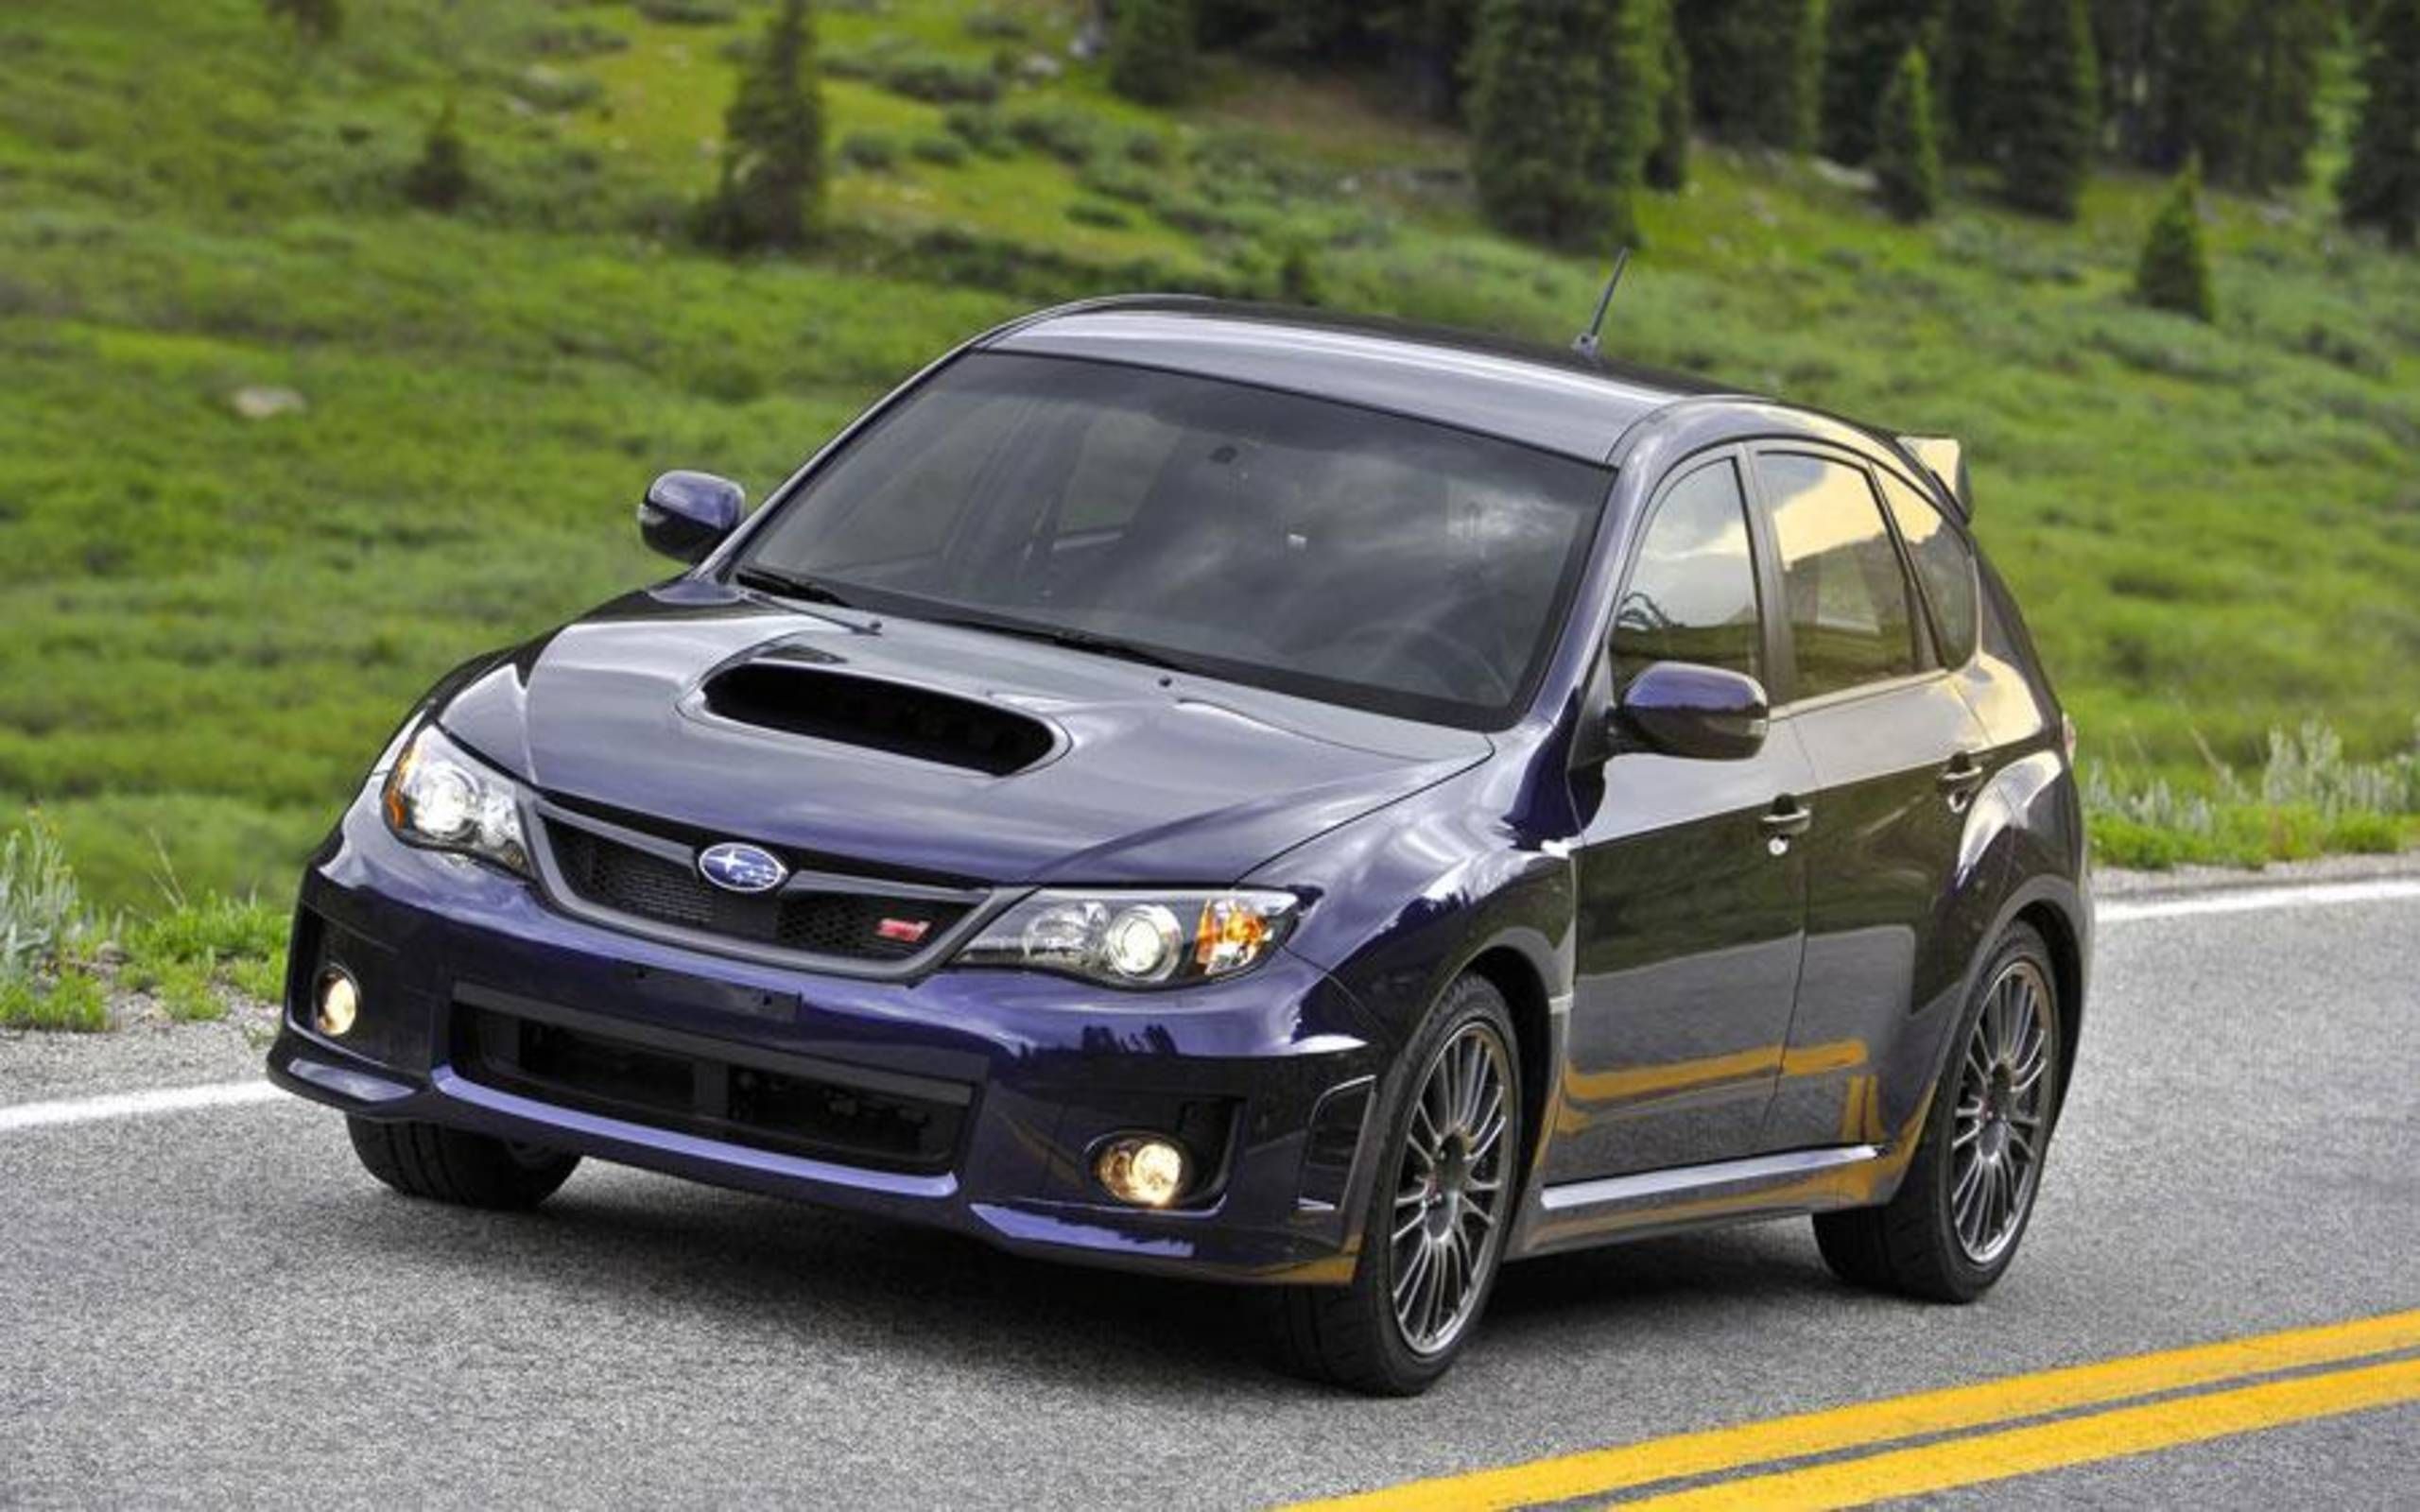 2012 Subaru Impreza Wrx Sti 5 Door Review Notes Still The All Wheel Drive Thriller We Love